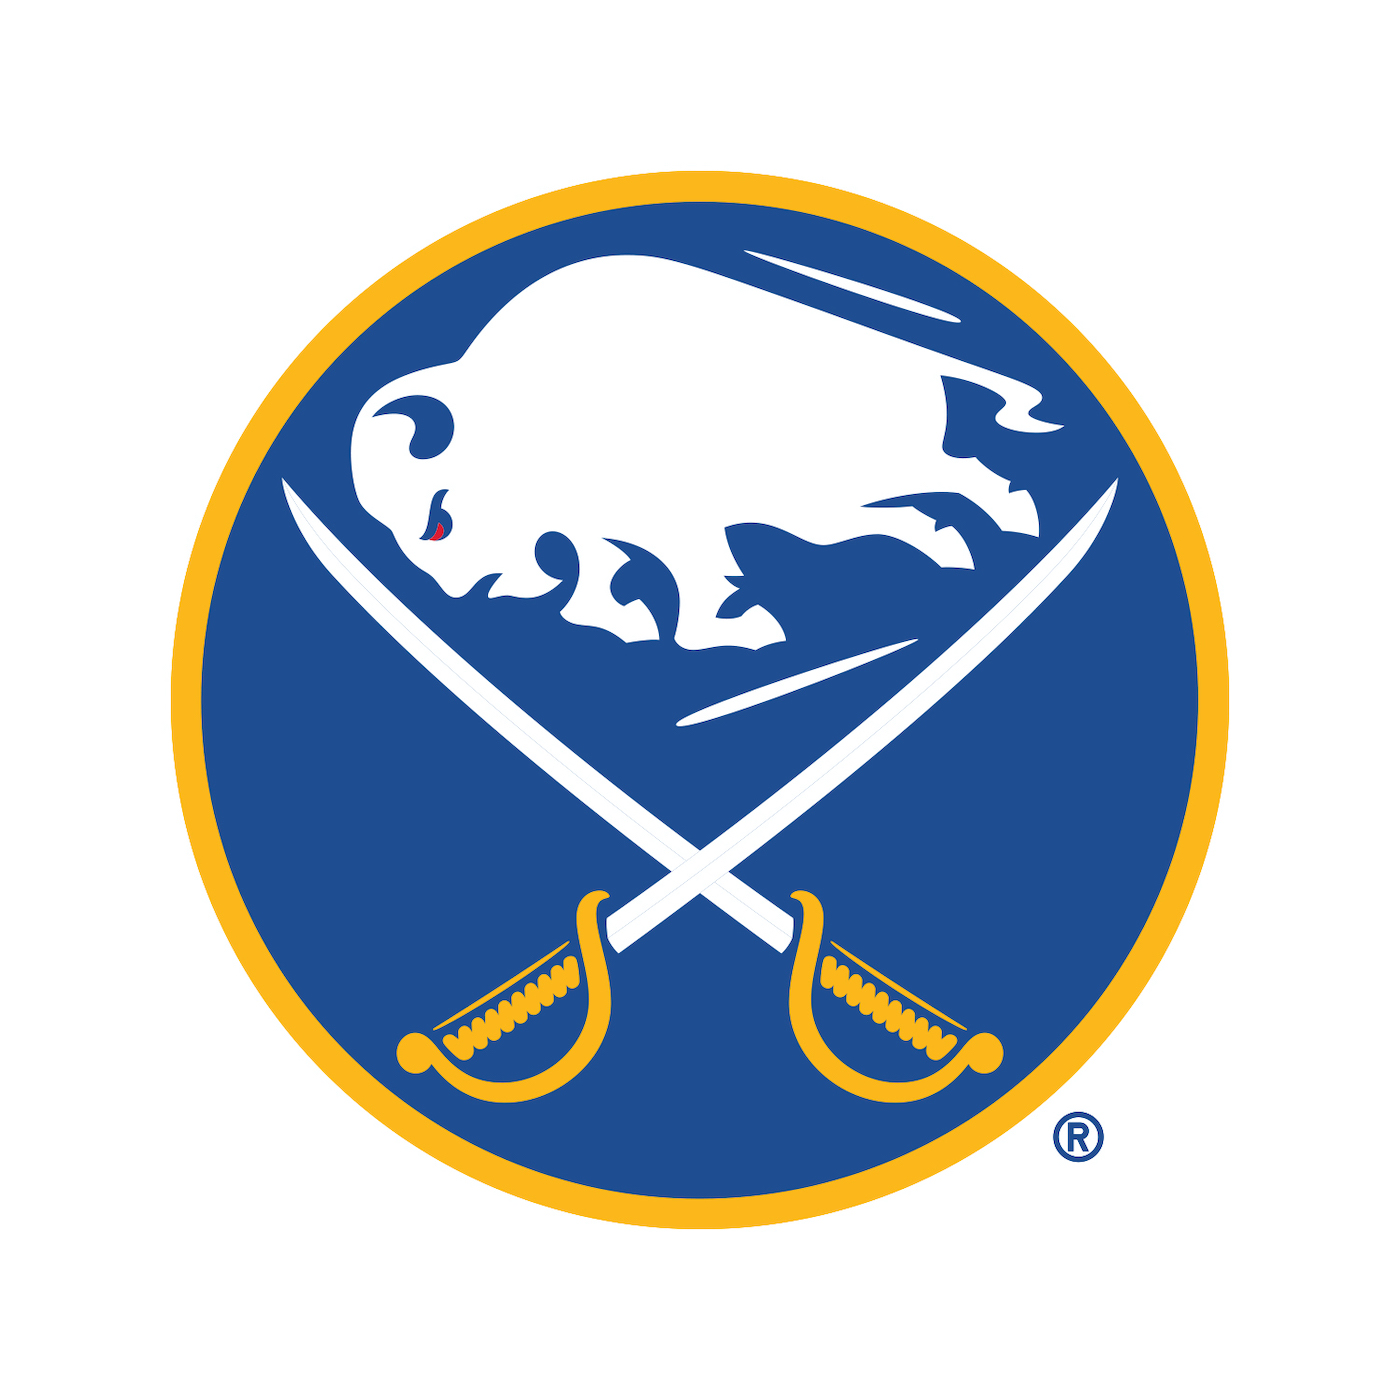 Buffalo Sabres logo courtesy of Pegula Sports and Entertainment.